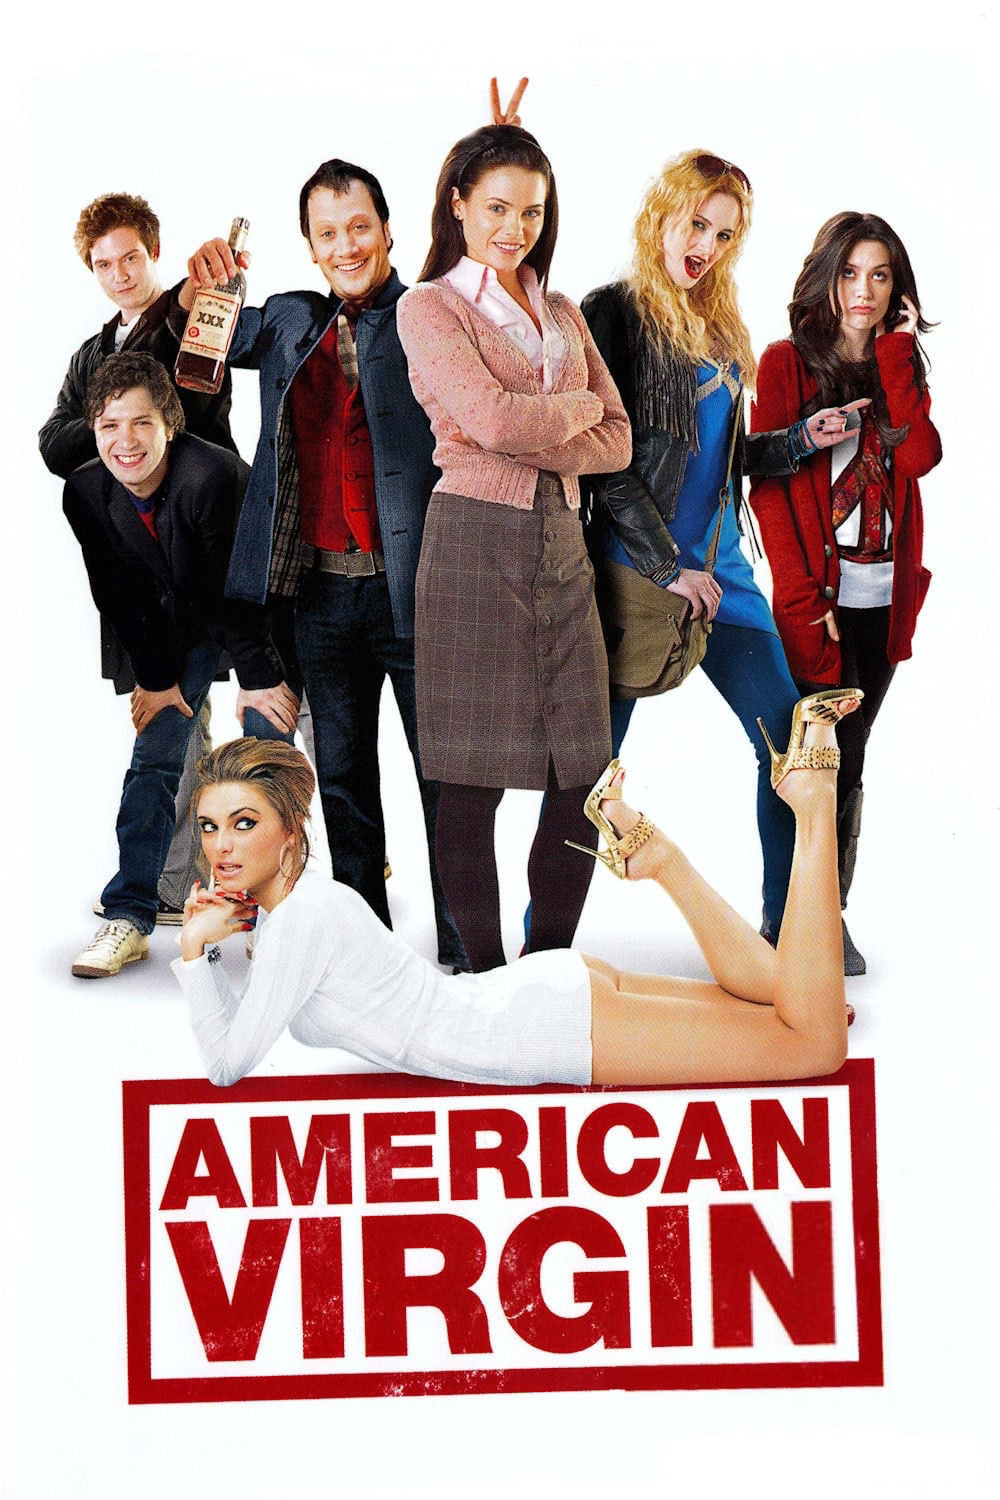 Poster Phim Trinh Tiết Kiểu Mỹ  (American Virgin)